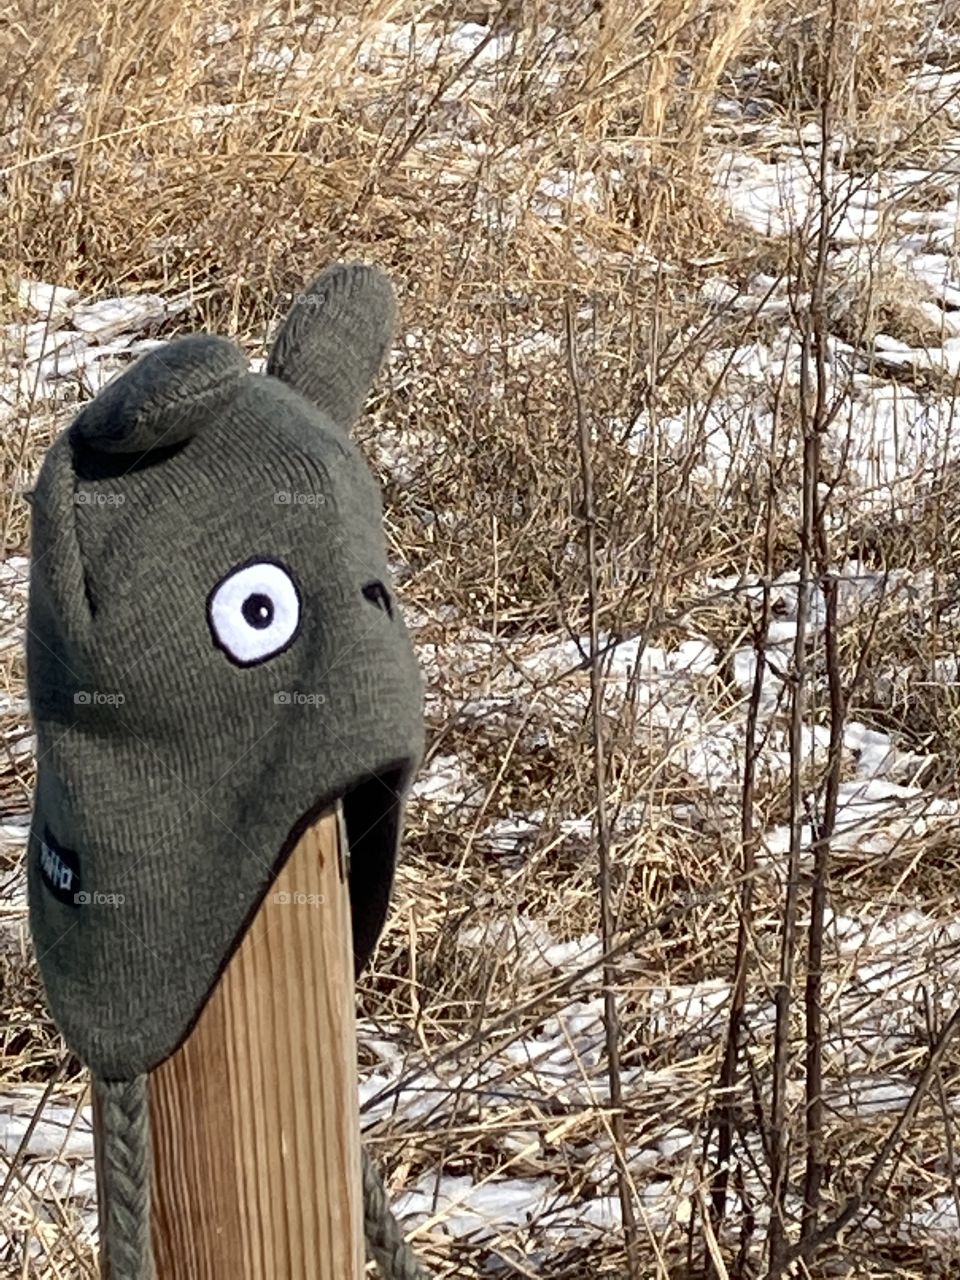 Winter ear hat with eyes on a pole in a winter landscape